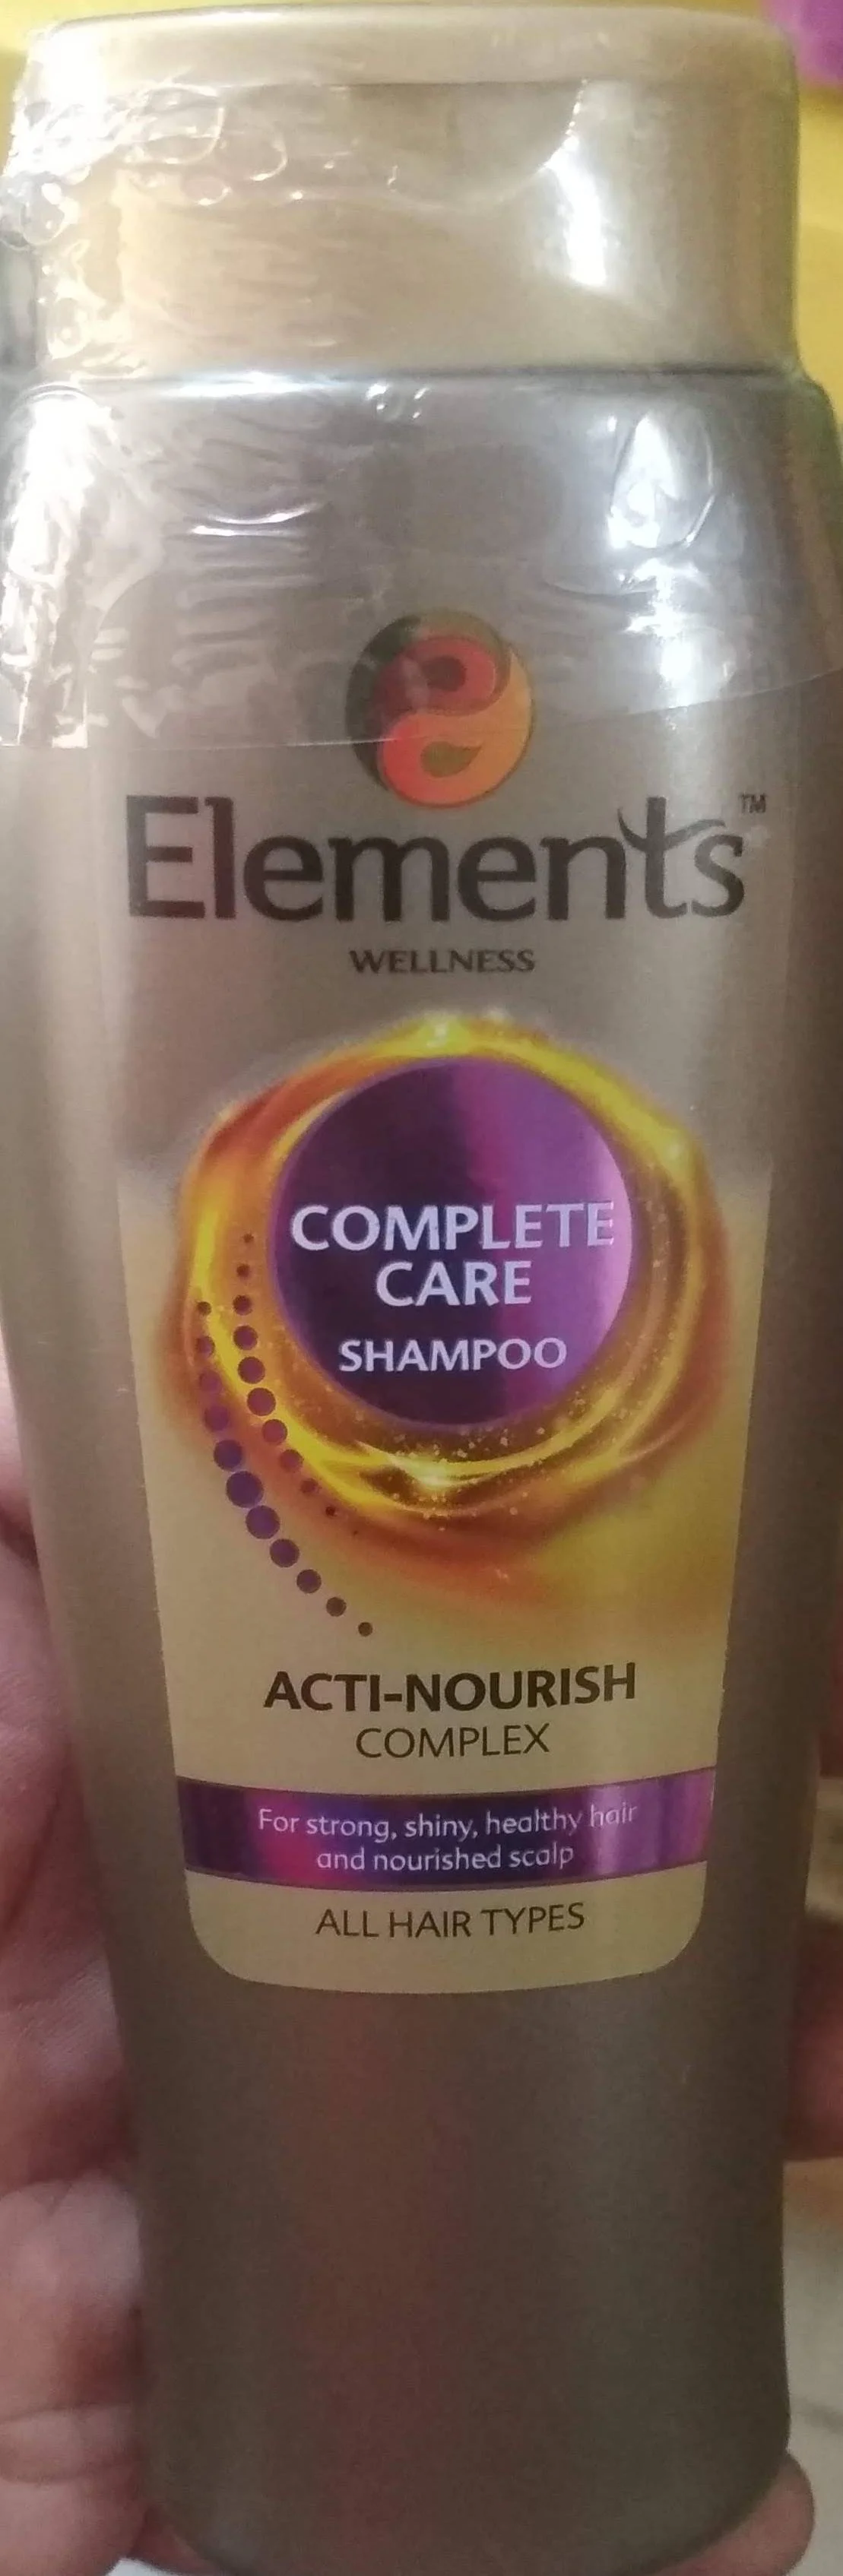 complete care shampoo 200ml elements wellness